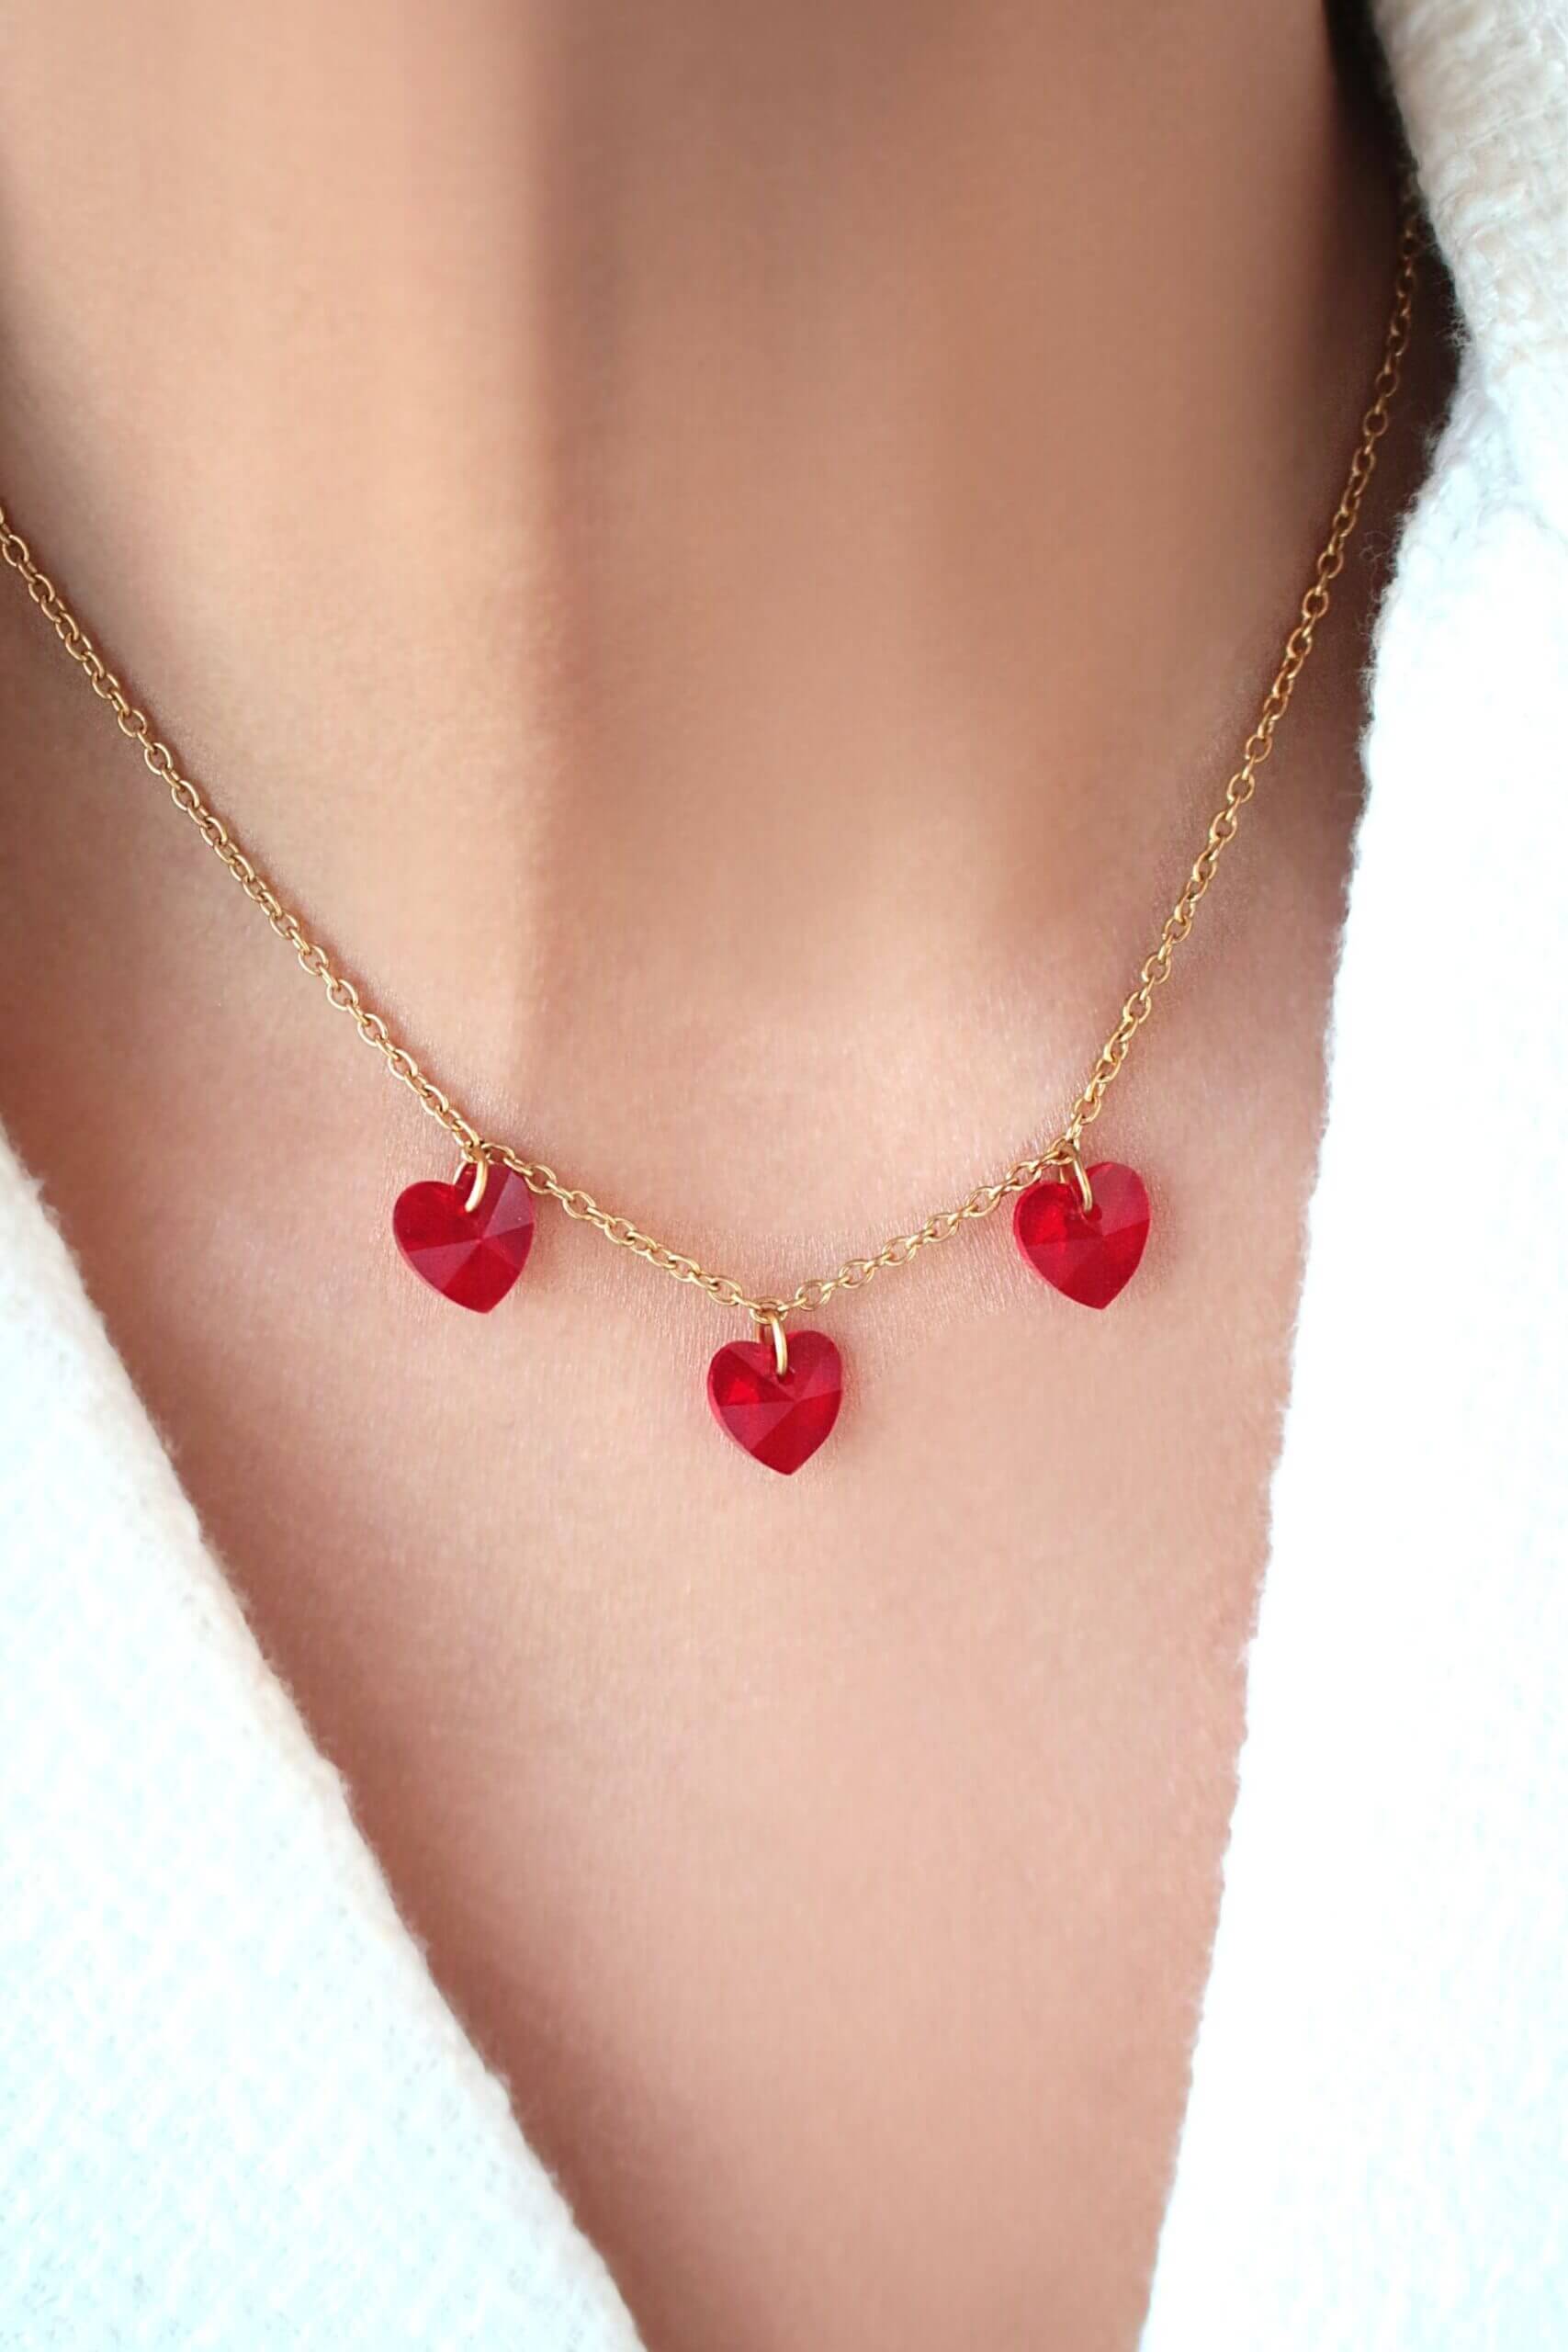 3 Red Hearts 24K Gold Necklace - Handmade in Europe, Hypoallergenic & Nickel-Free Bijou Her